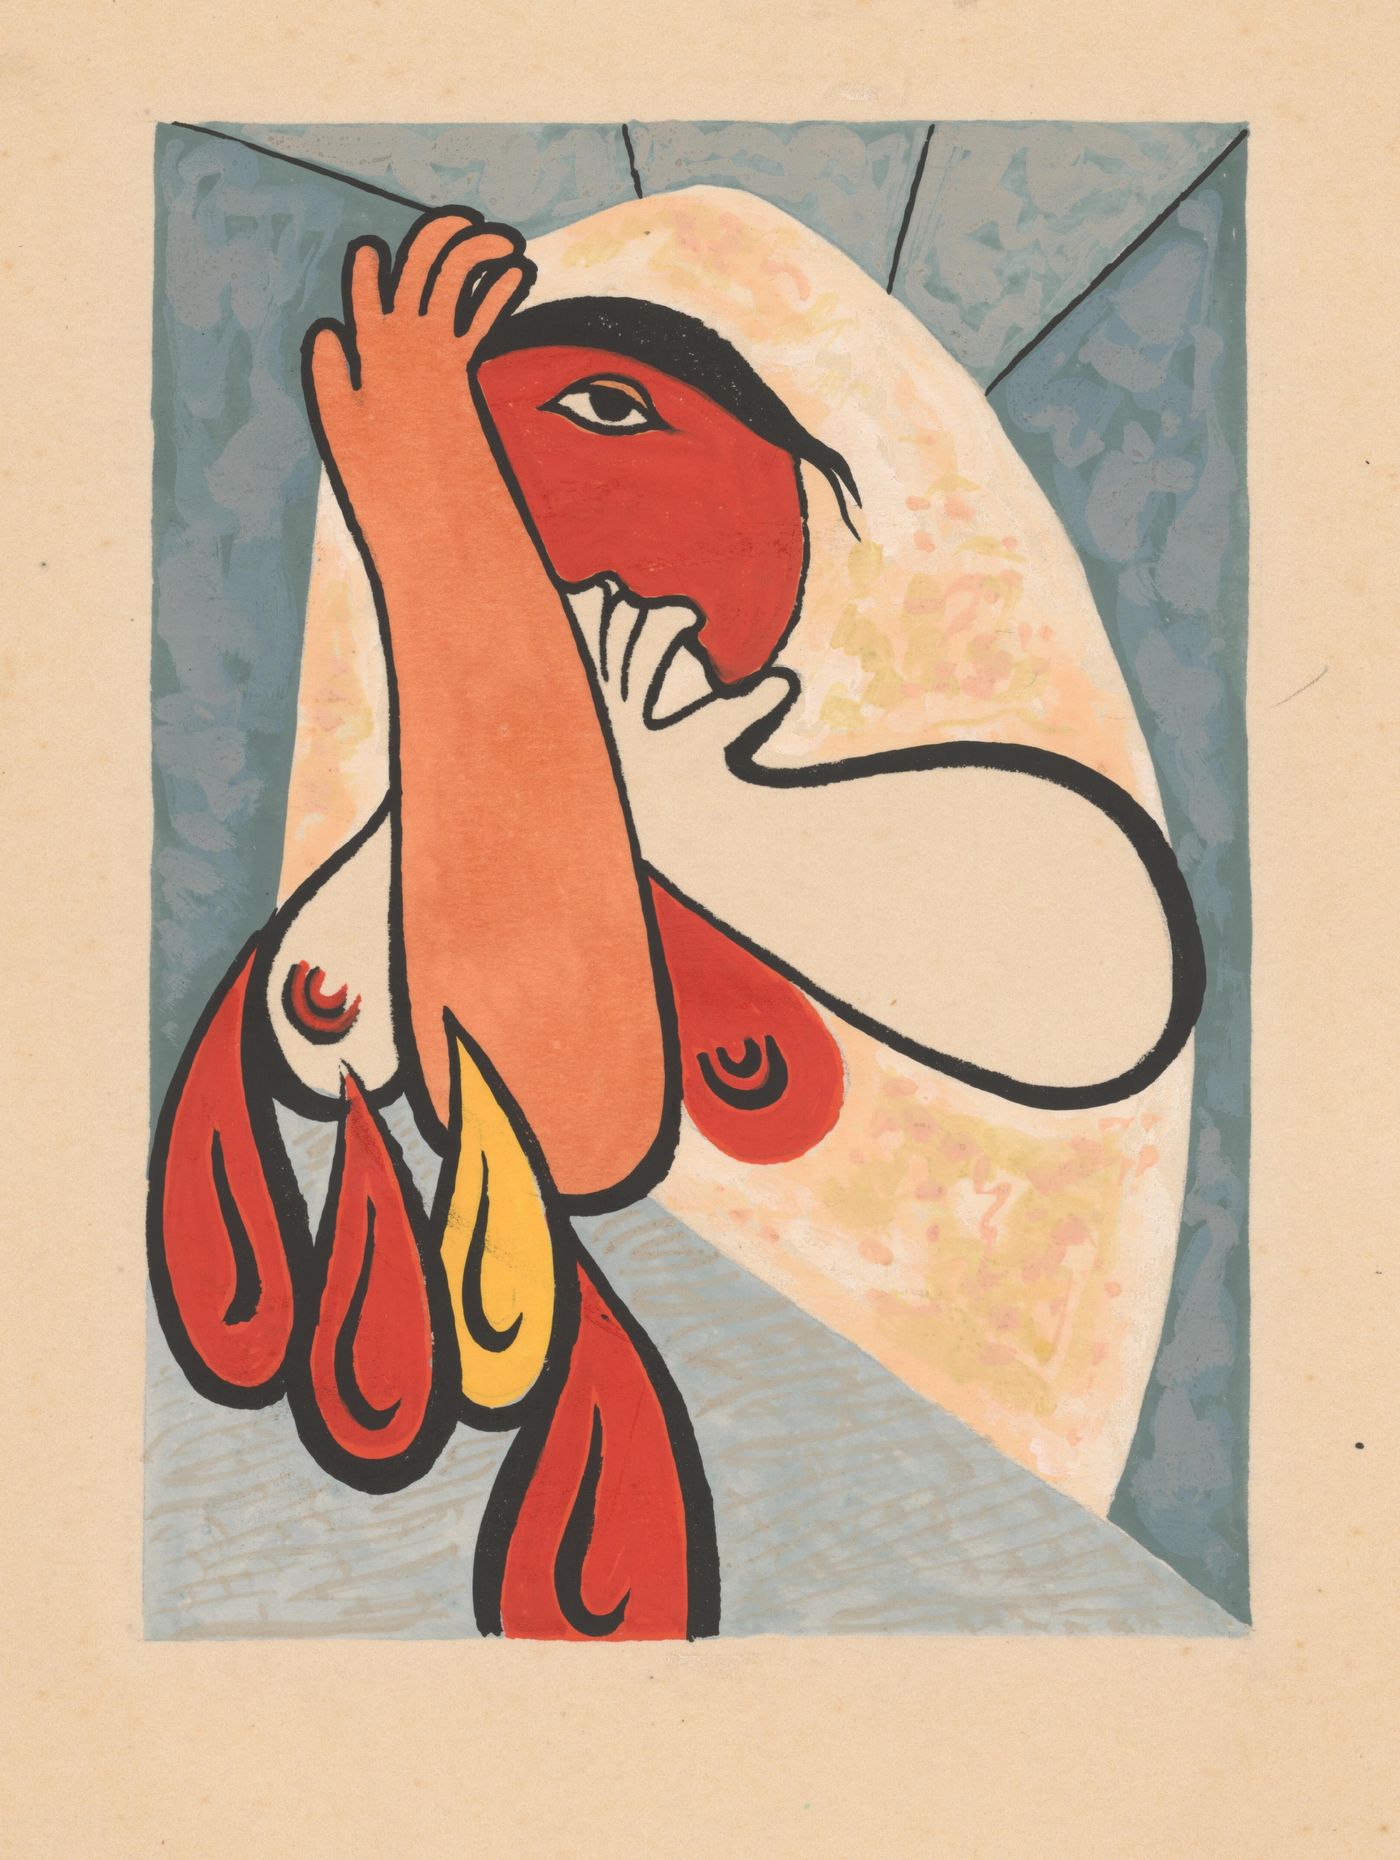 Fire (crying woman) by Mikuláš Galanda CC0 Public Domain